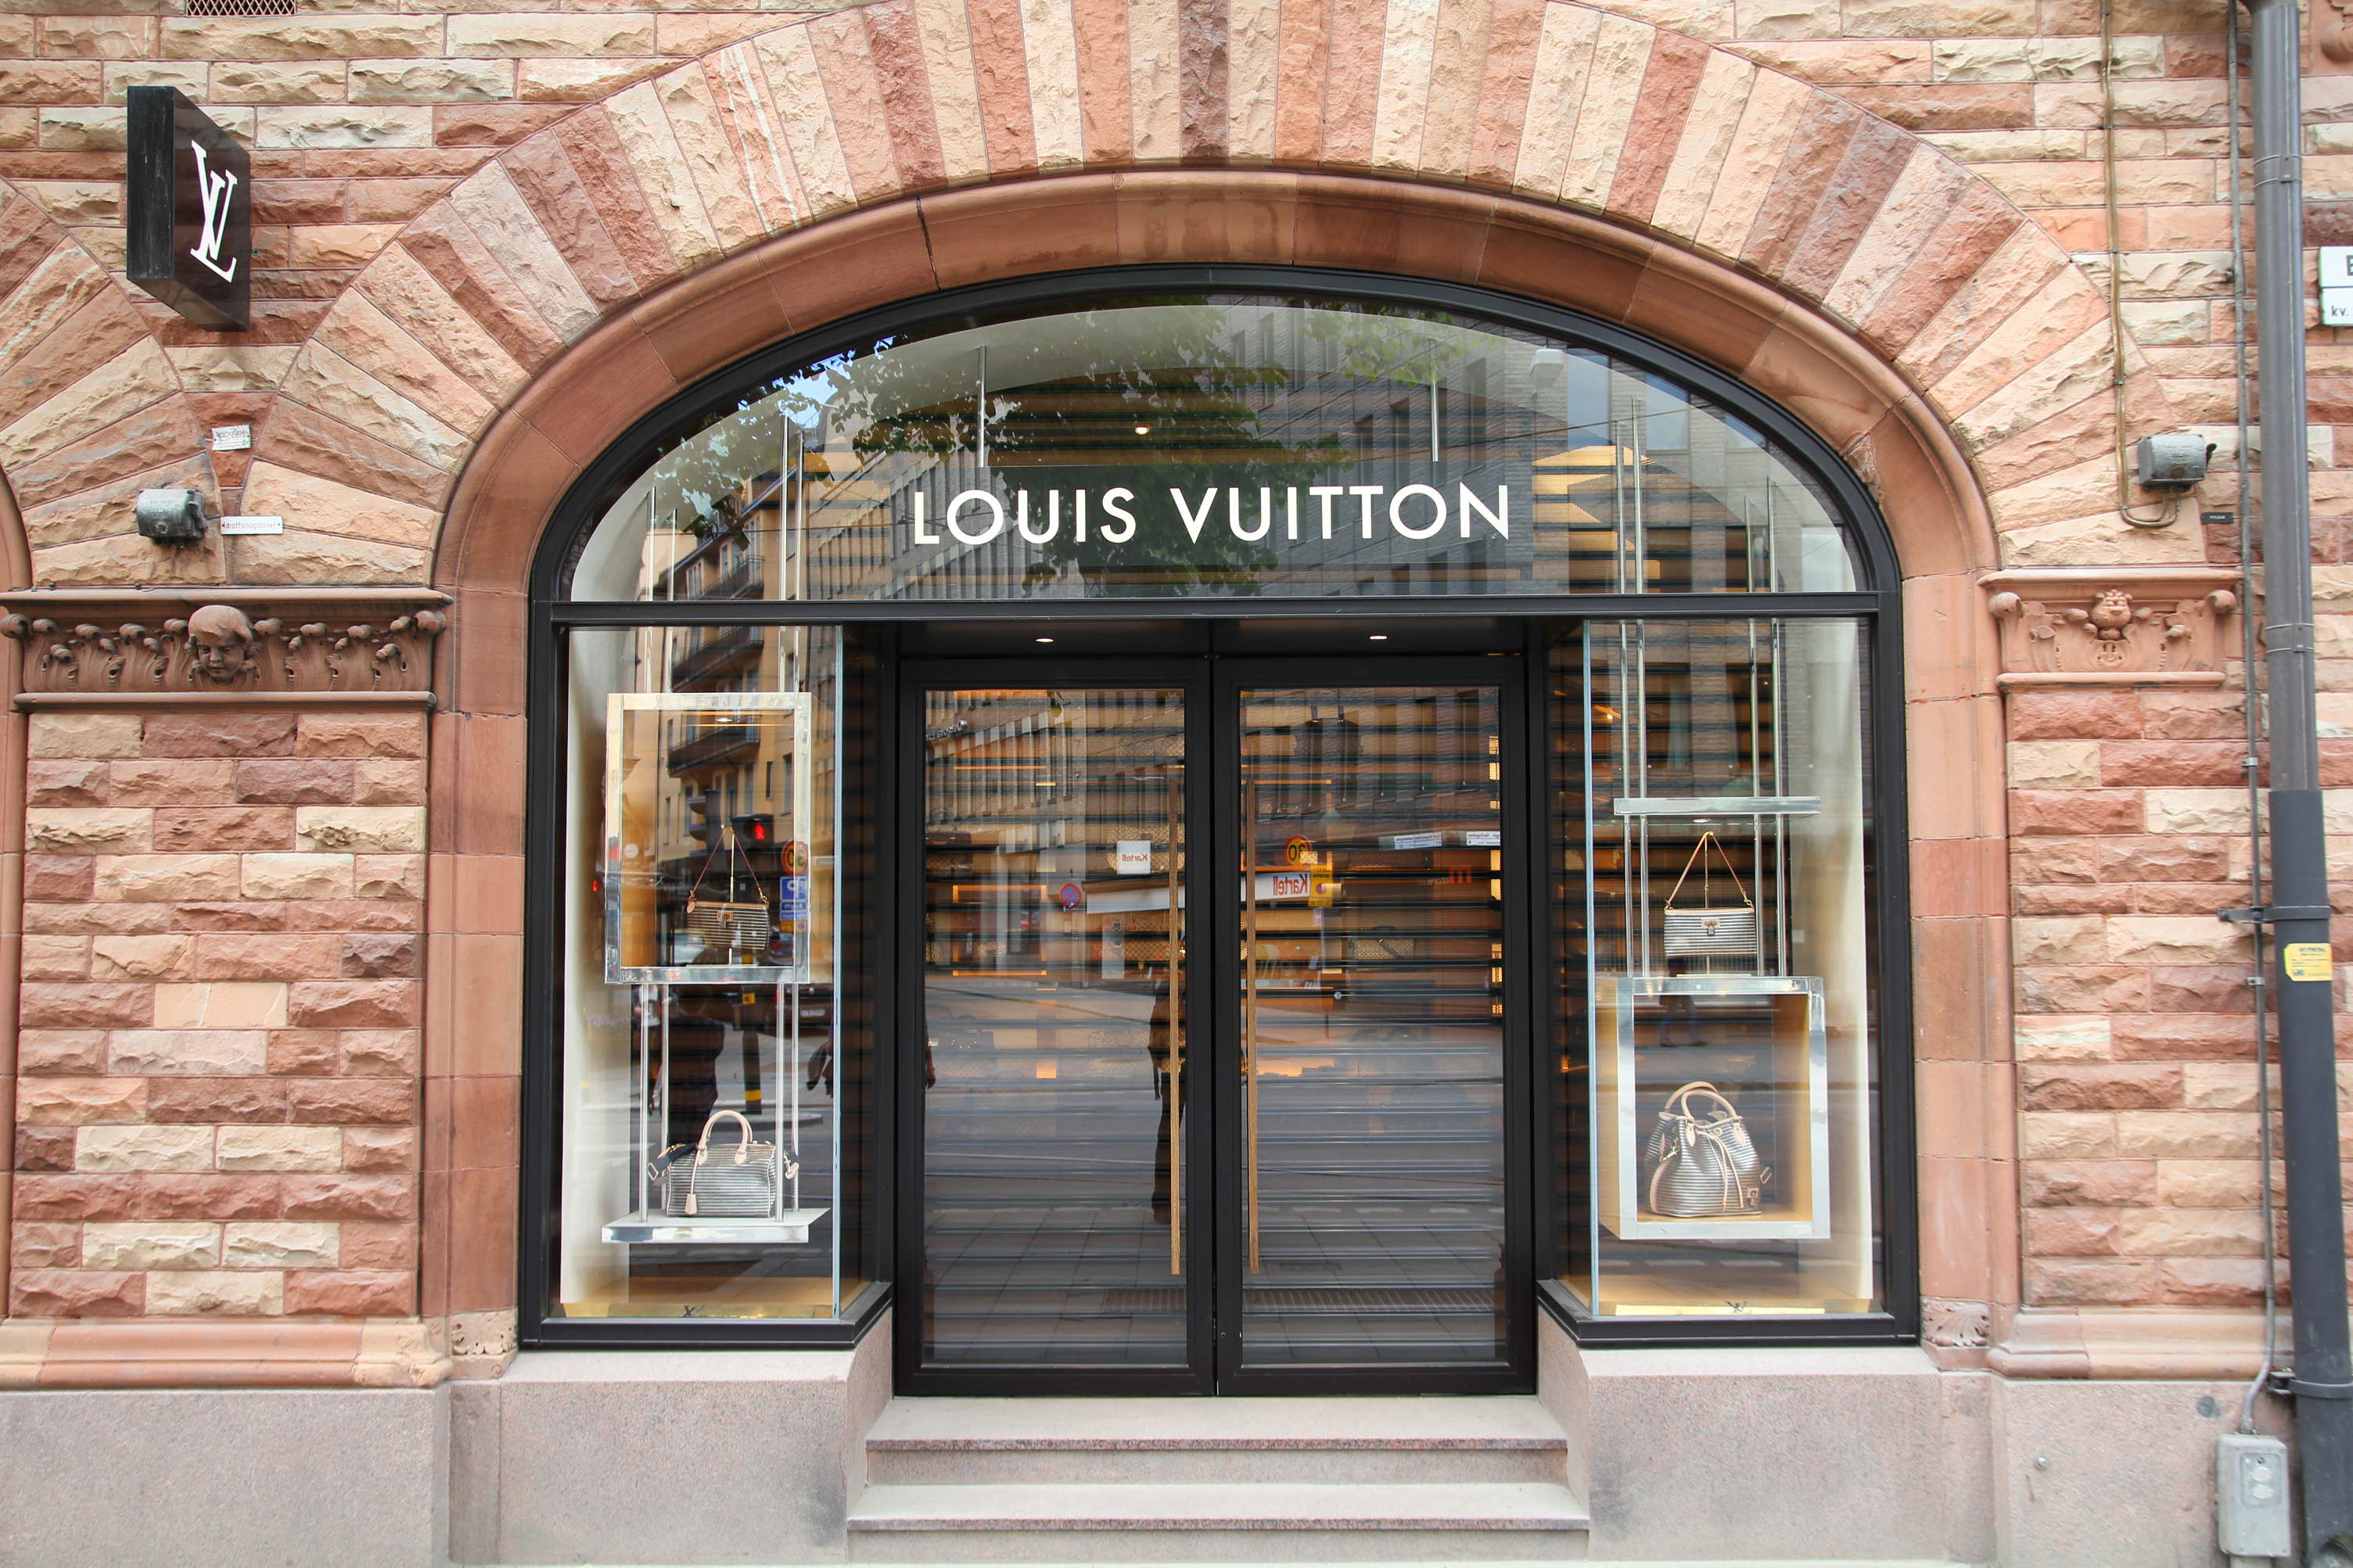 financialounge -  GAM Gucci JB Luxury Brands Fund L'Oreal lusso LVMH